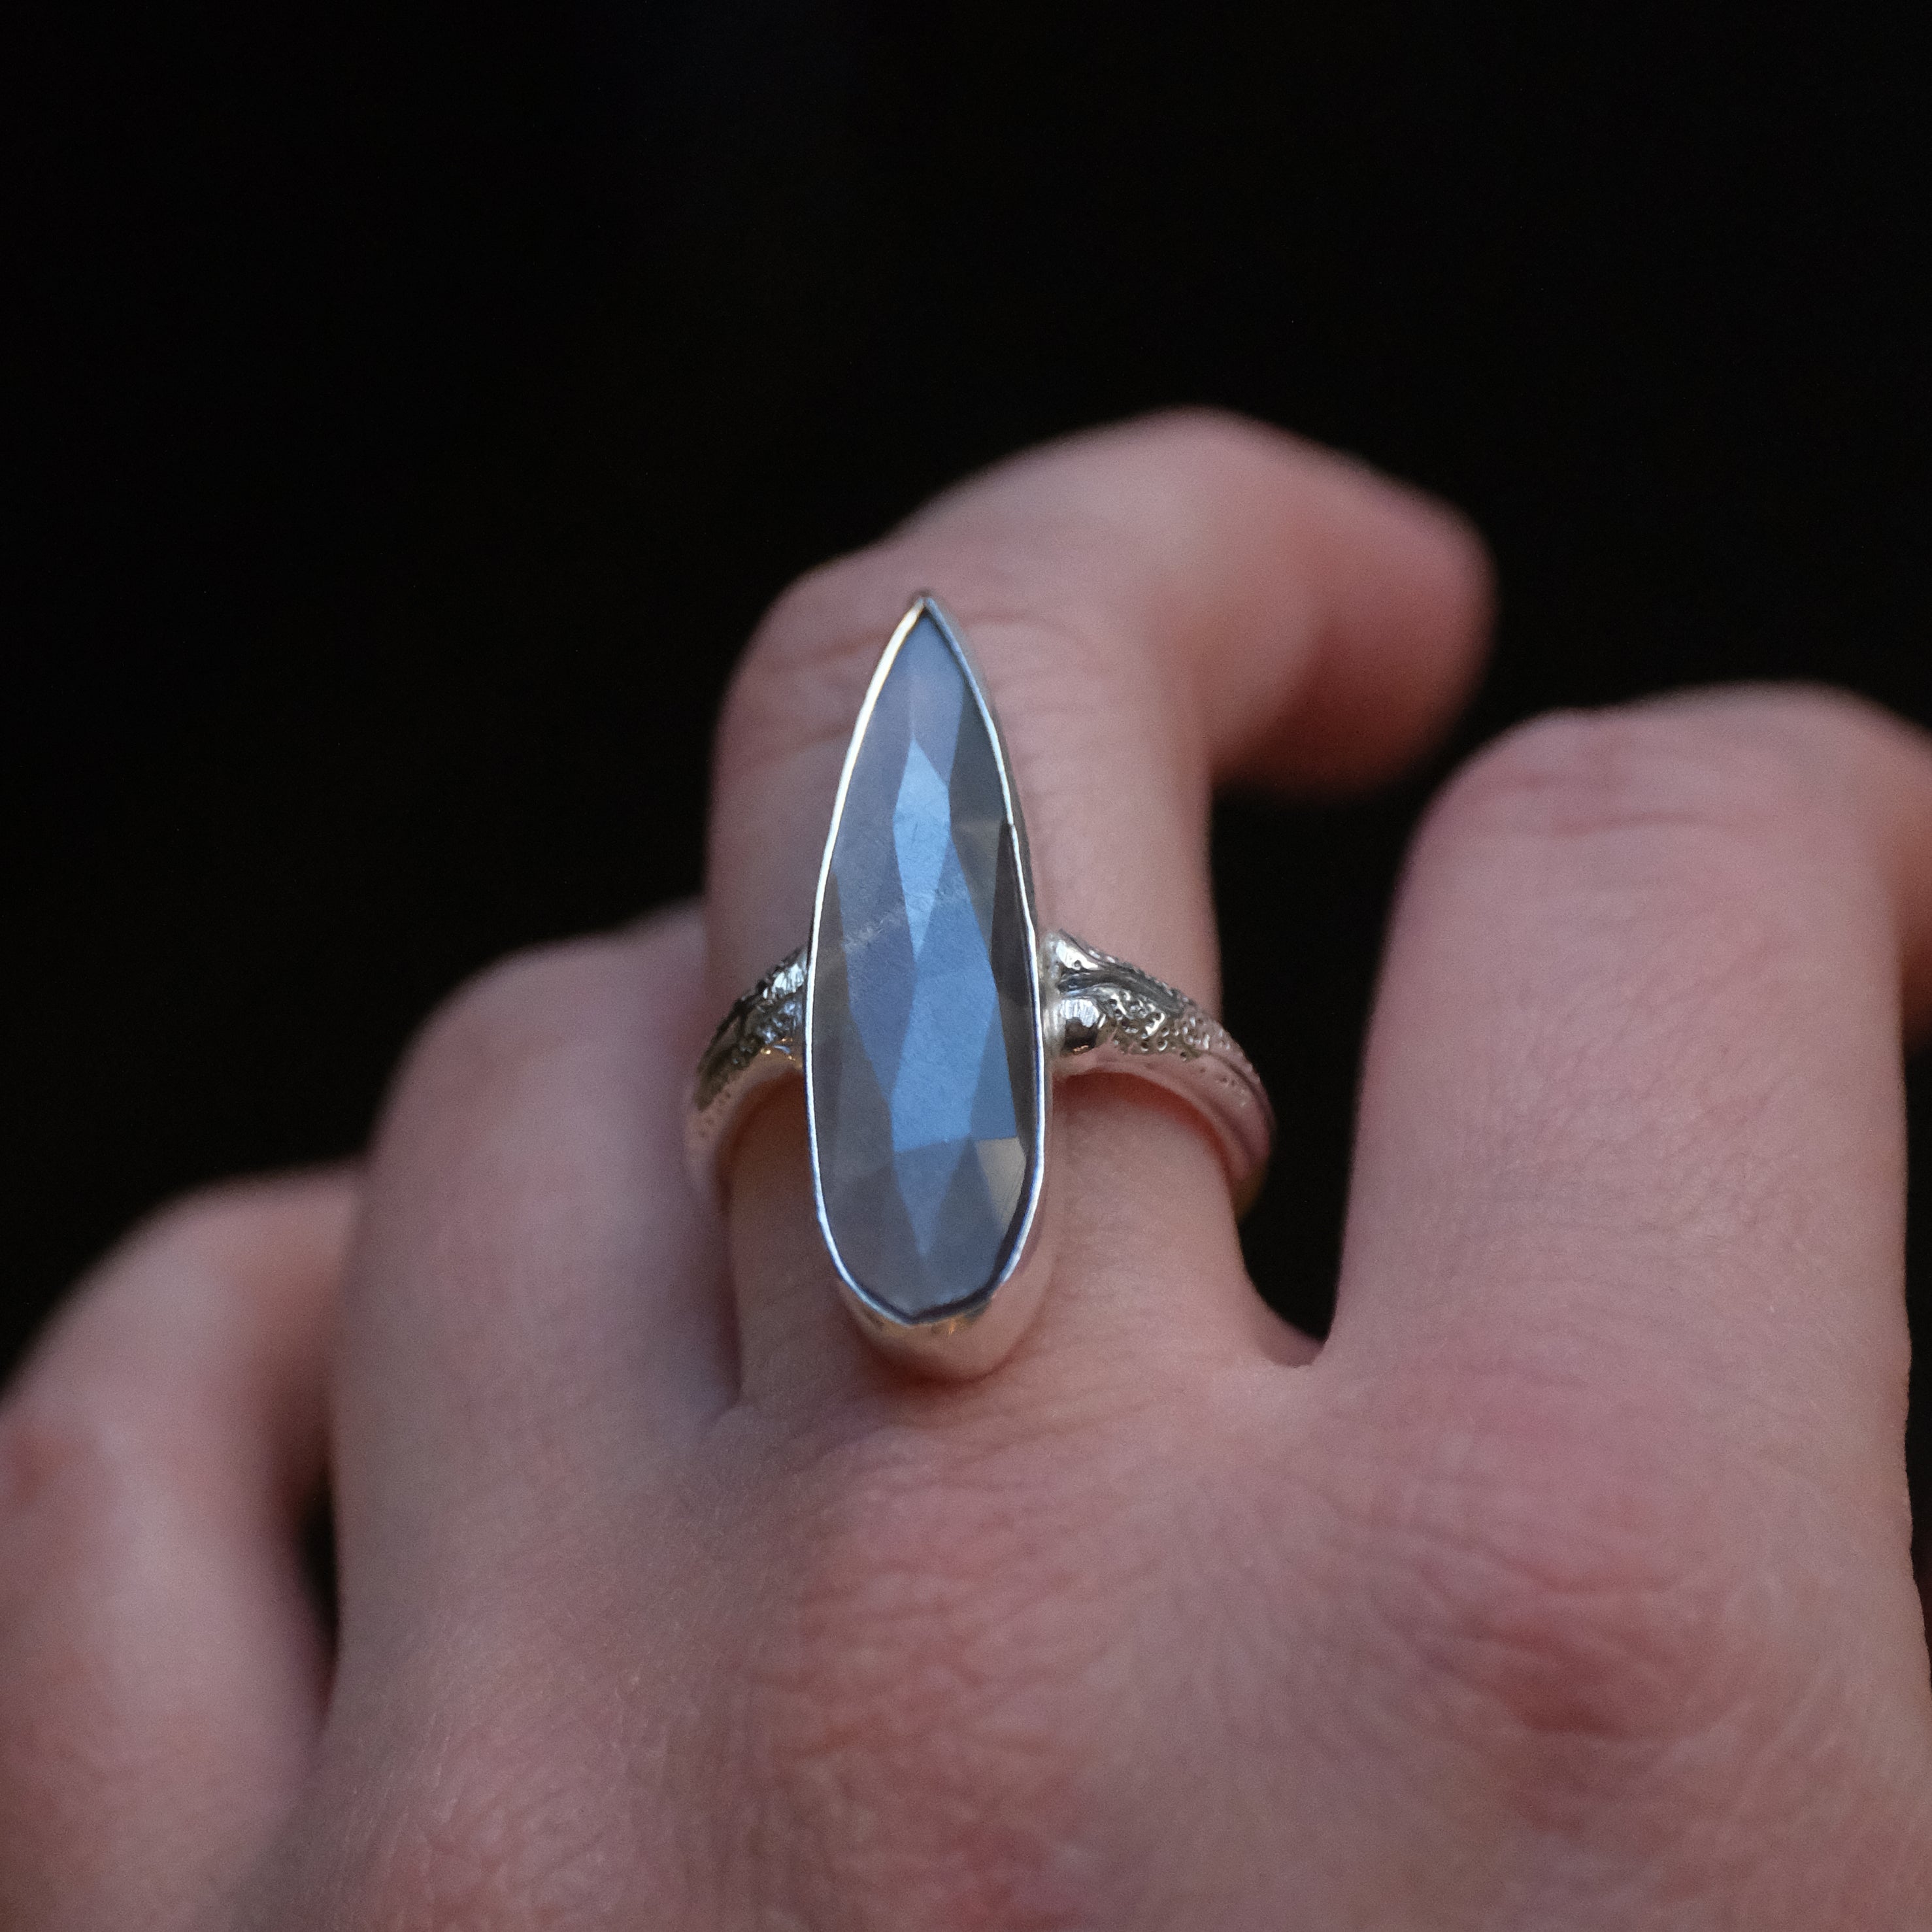 Lavender Bones Moonstone Ring (Size 6) - One of a Kind